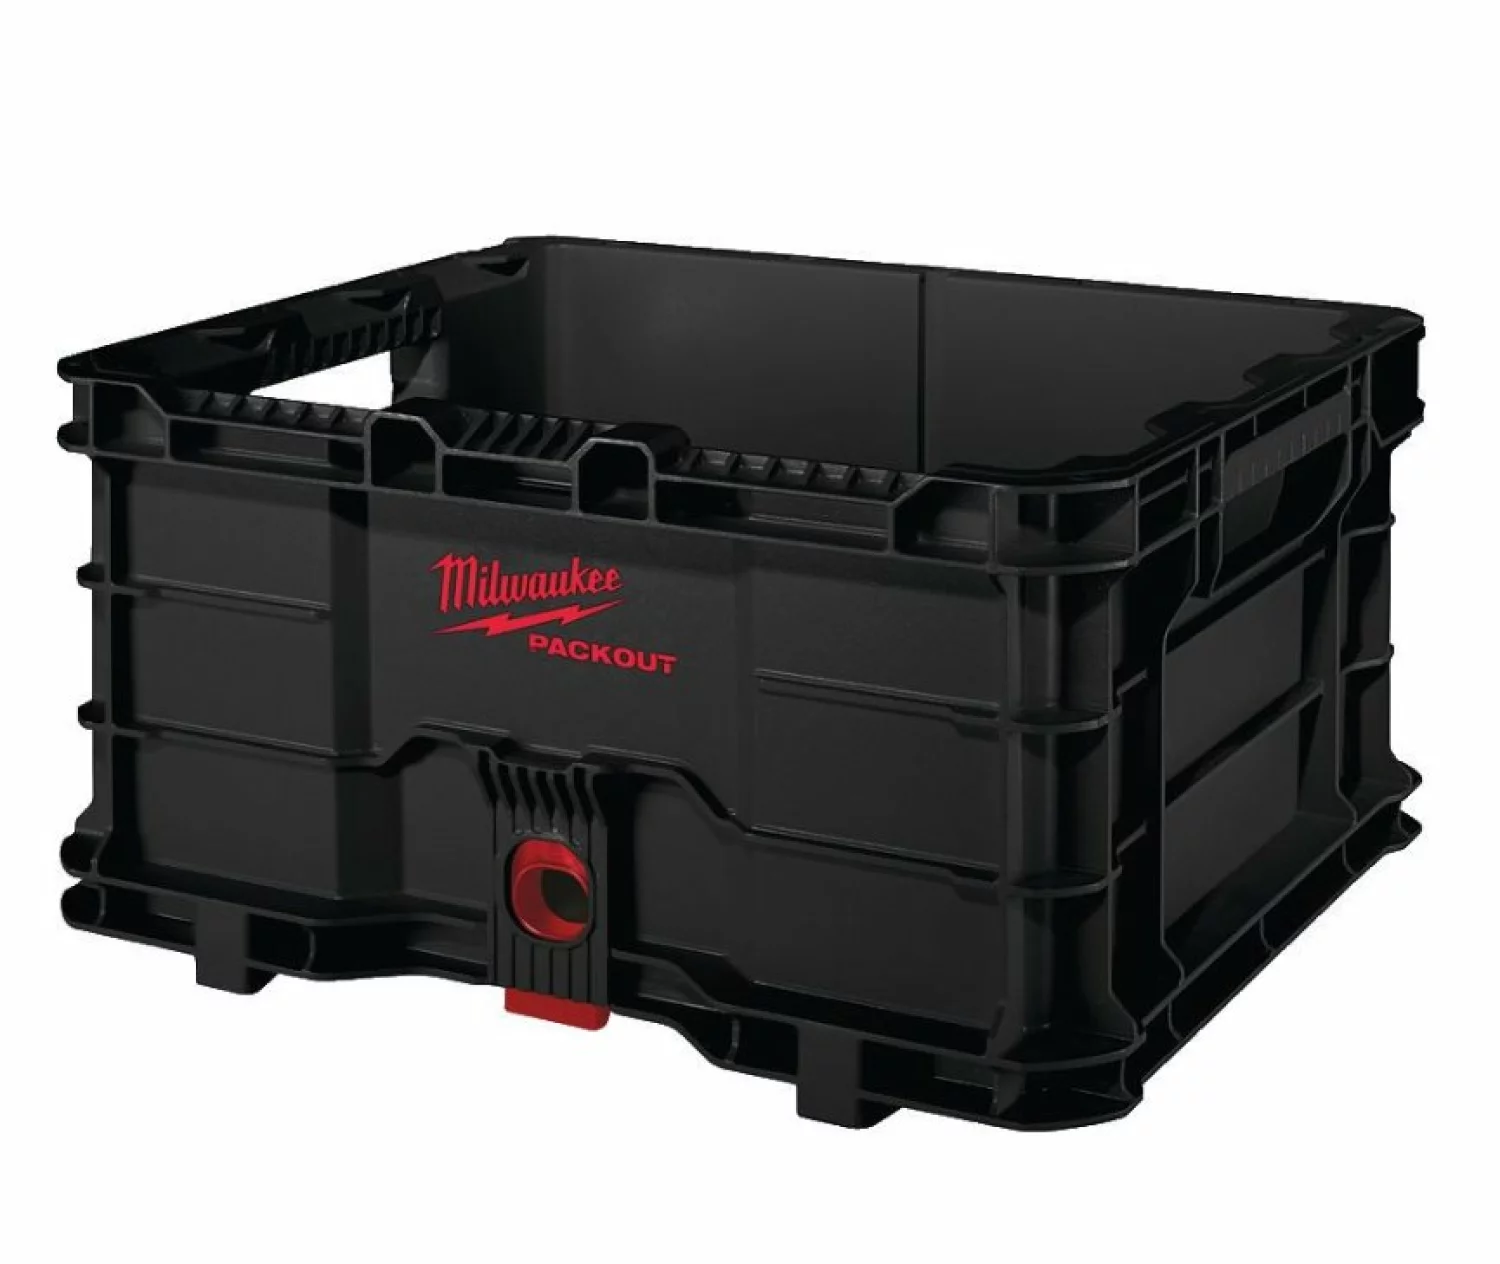 Milwaukee Packout Crate Opbergsysteem - 450 x 390 x 250mm